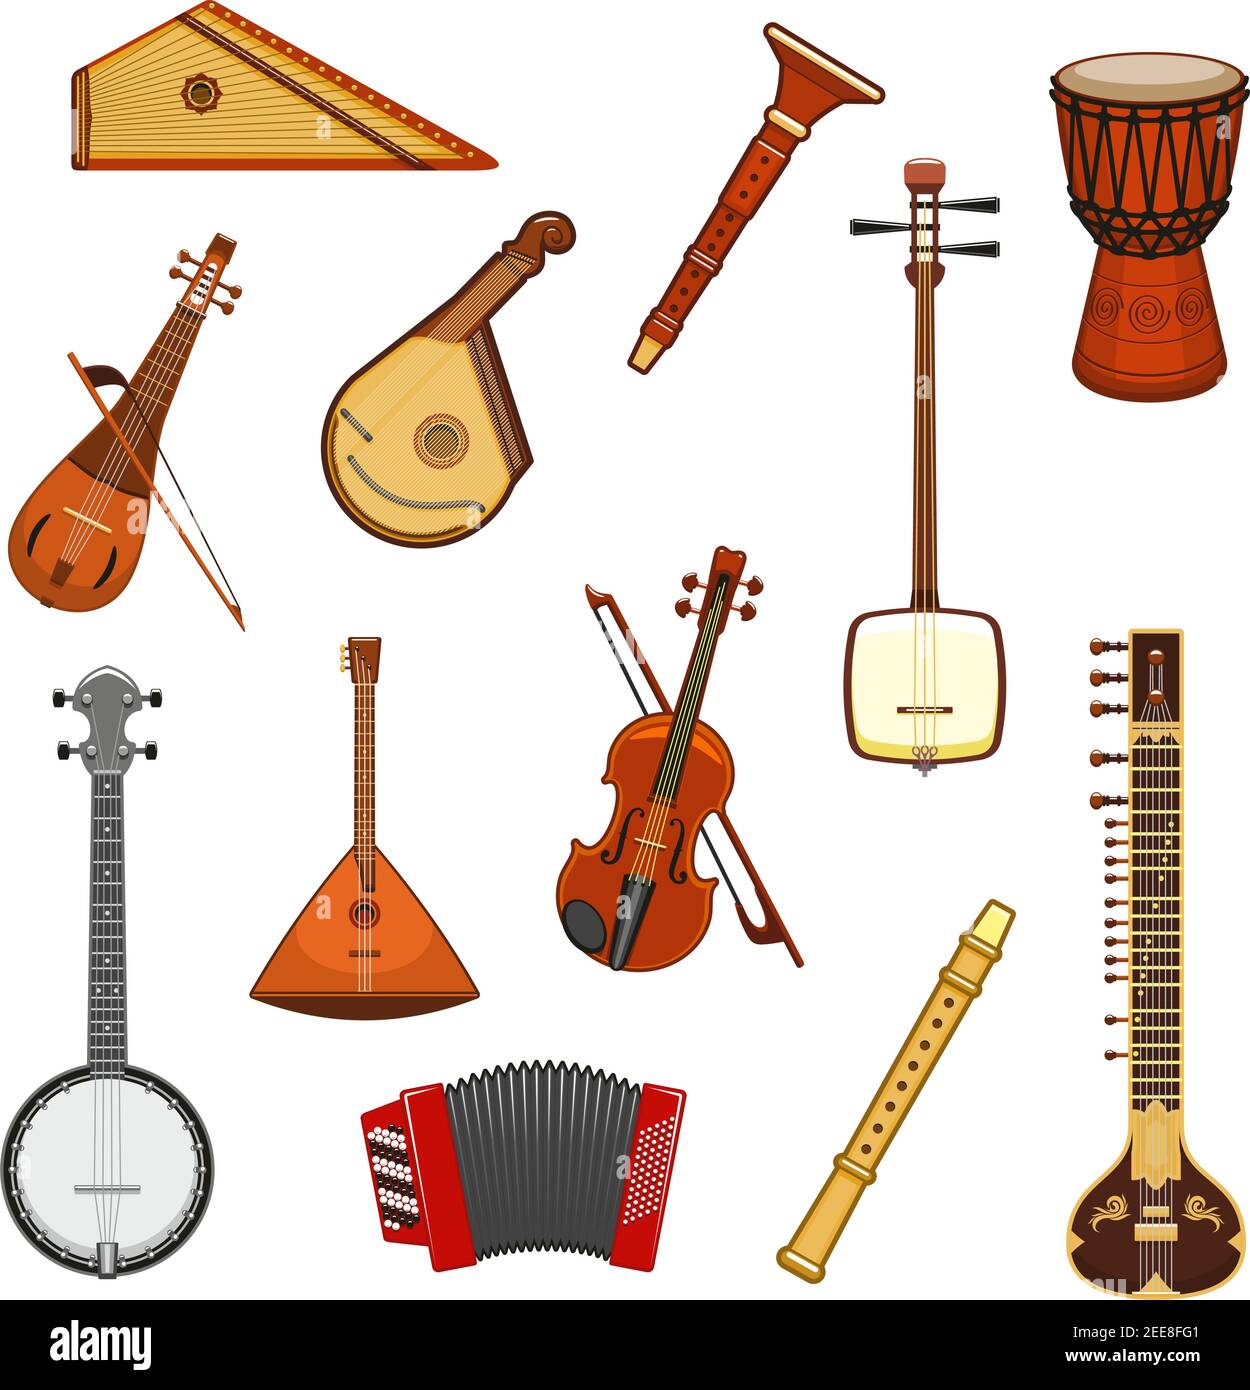 Instrumento musical conjunto de iconos aislados de instrumentos musicales  clásicos y étnicos. Violín, mandolina, banjo, tambor djembe, balalaika,  sitar, flauta, acordeón Imagen Vector de stock - Alamy